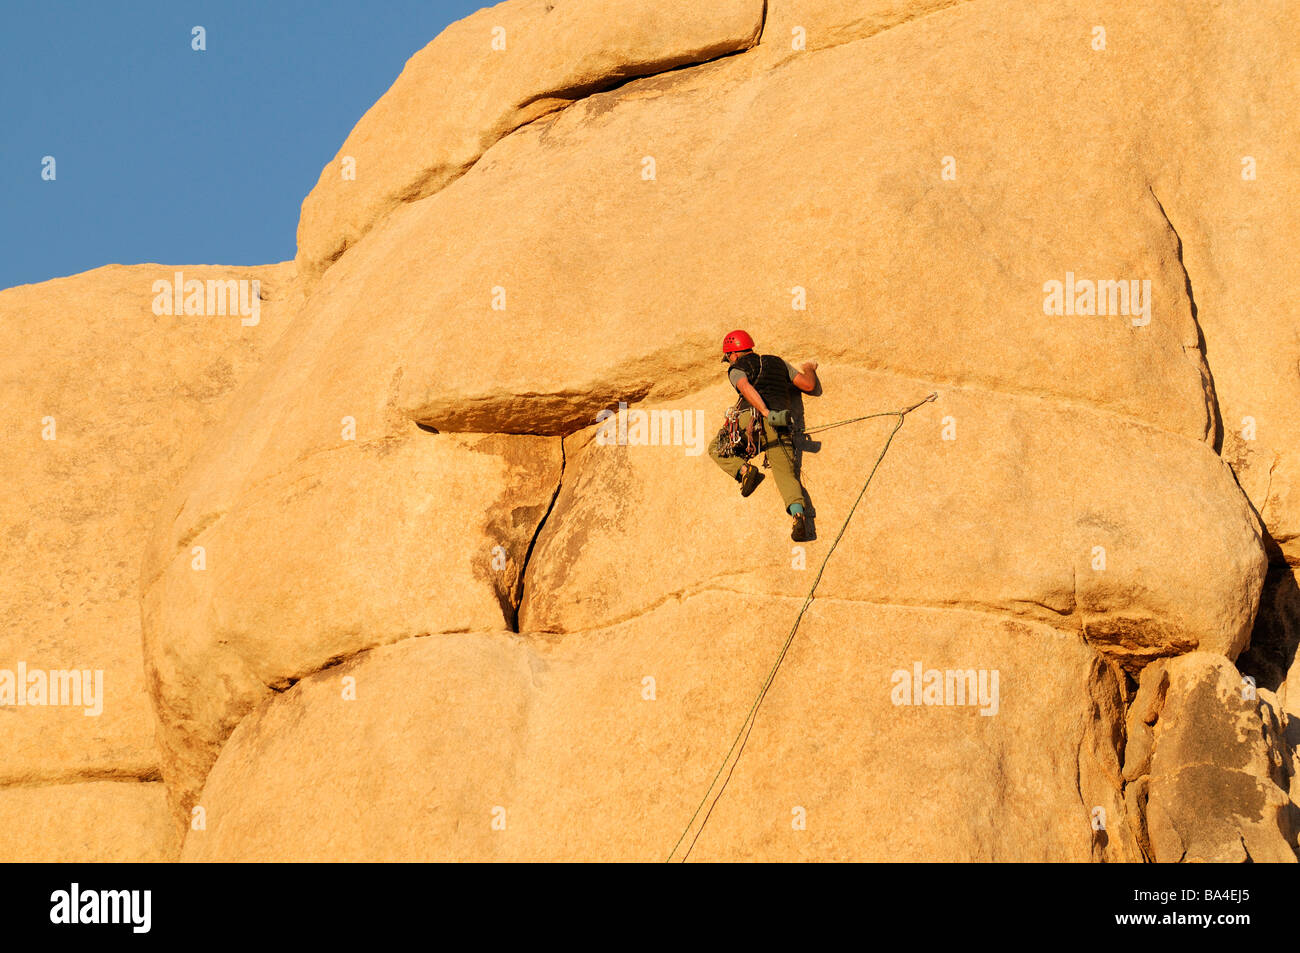 one rock climber man getting ready to climb a rock wall face pinnacle Hidden Valley Joshua Tree National Park Stock Photo